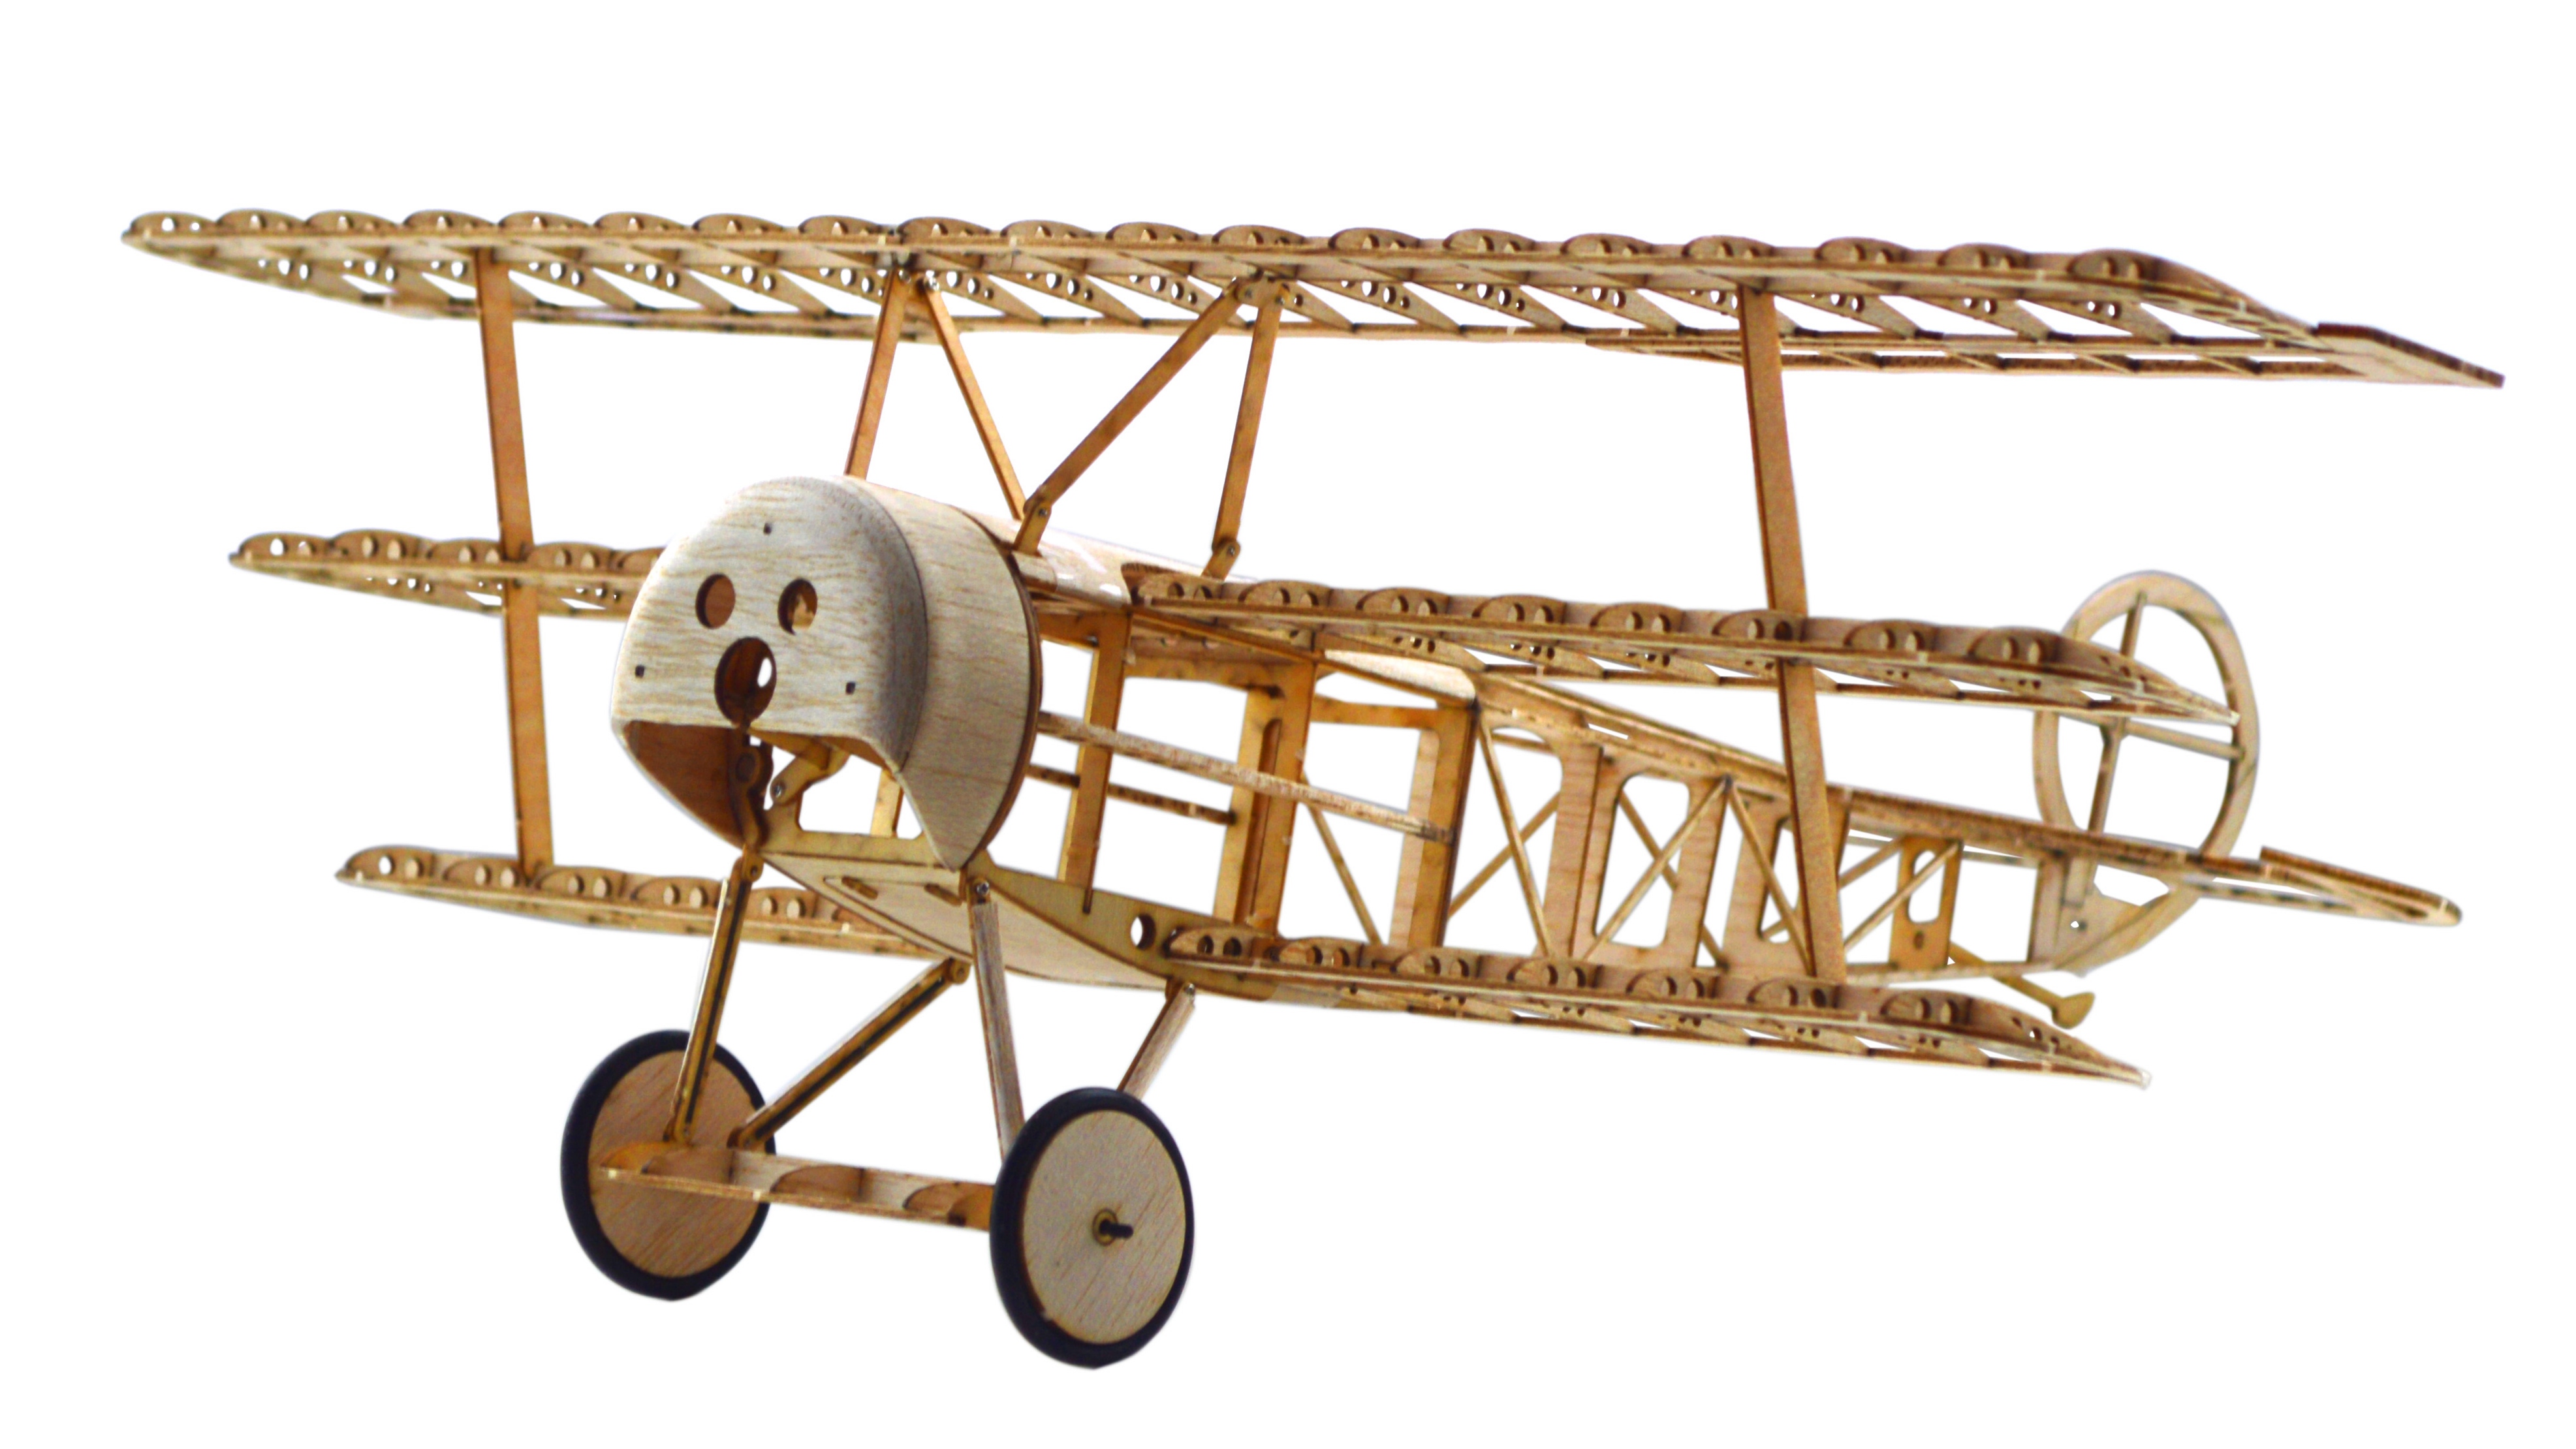 Tony-Rays-AeroModel-Fokker-Dr1-358mm-Wingspan-Balsa-Wood-Laser-Cut-Triplane-RC-Airplane-Warbird-KIT-1798764-1